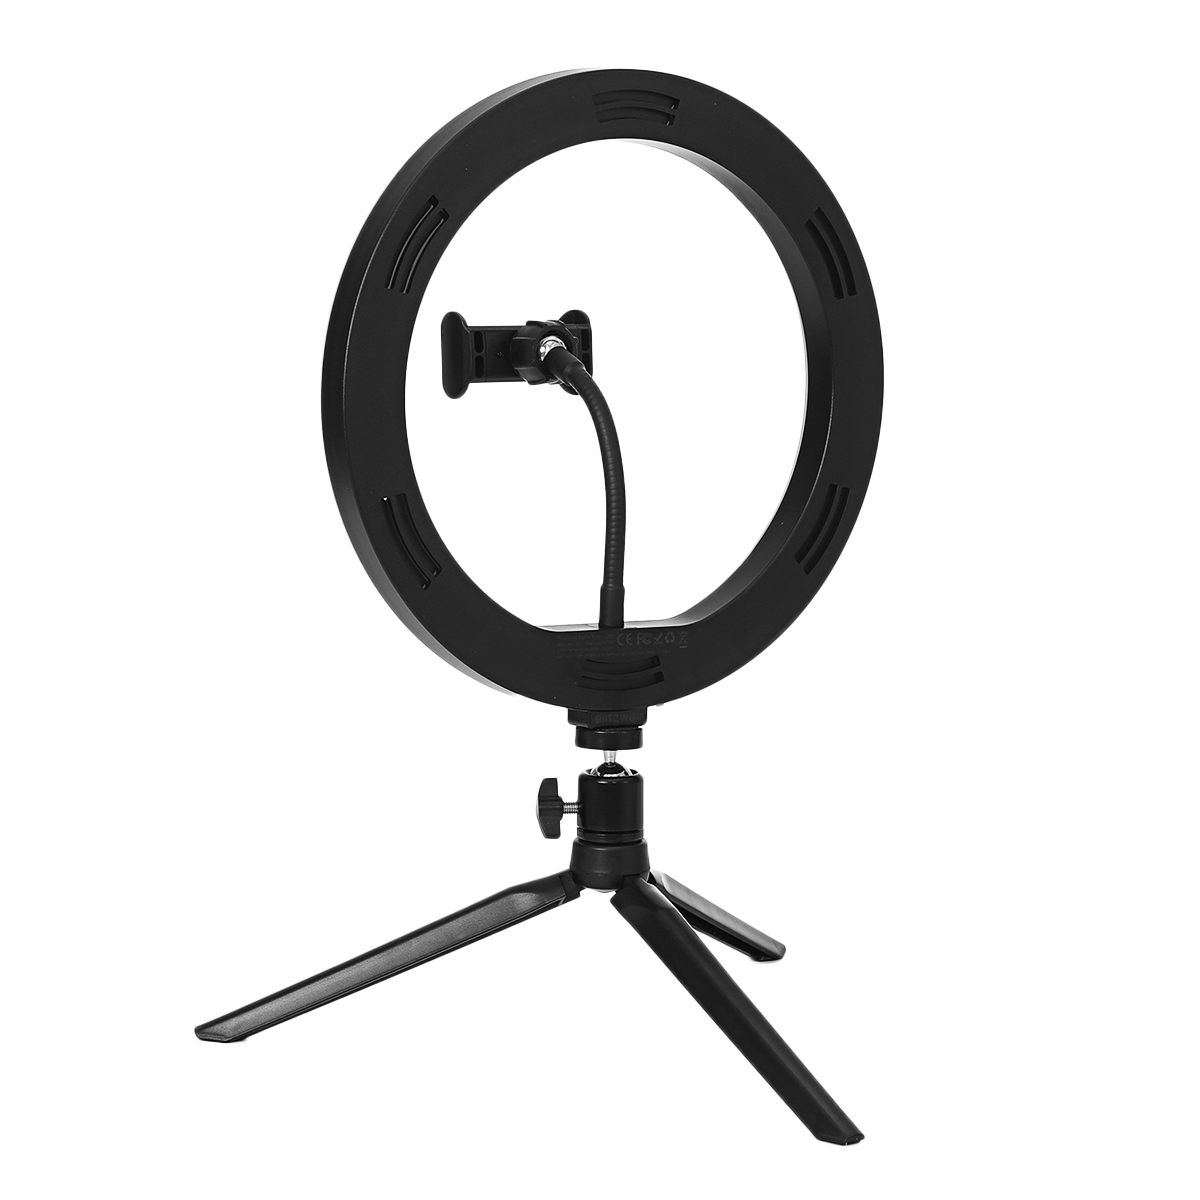 102-inch-Diameter-10-Brightness-RGB-LED-Makeup-Fill-Light-Selfie-Ring-Lamp-Phone-Holder-Tripod-Stand-1788455-6